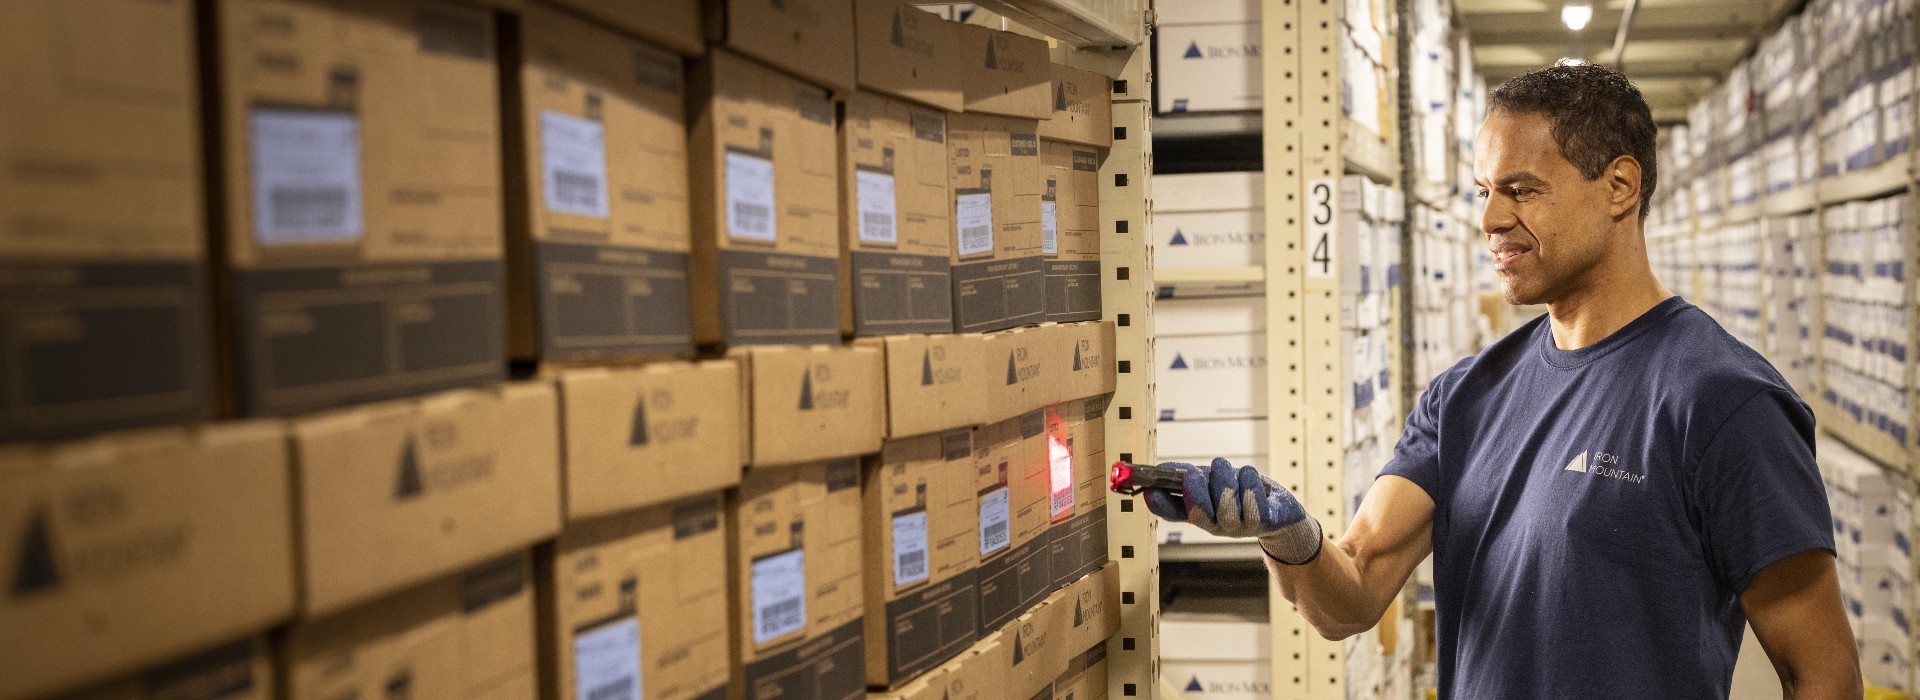 Archive Boxes & Records Storage Cartons, Information Management